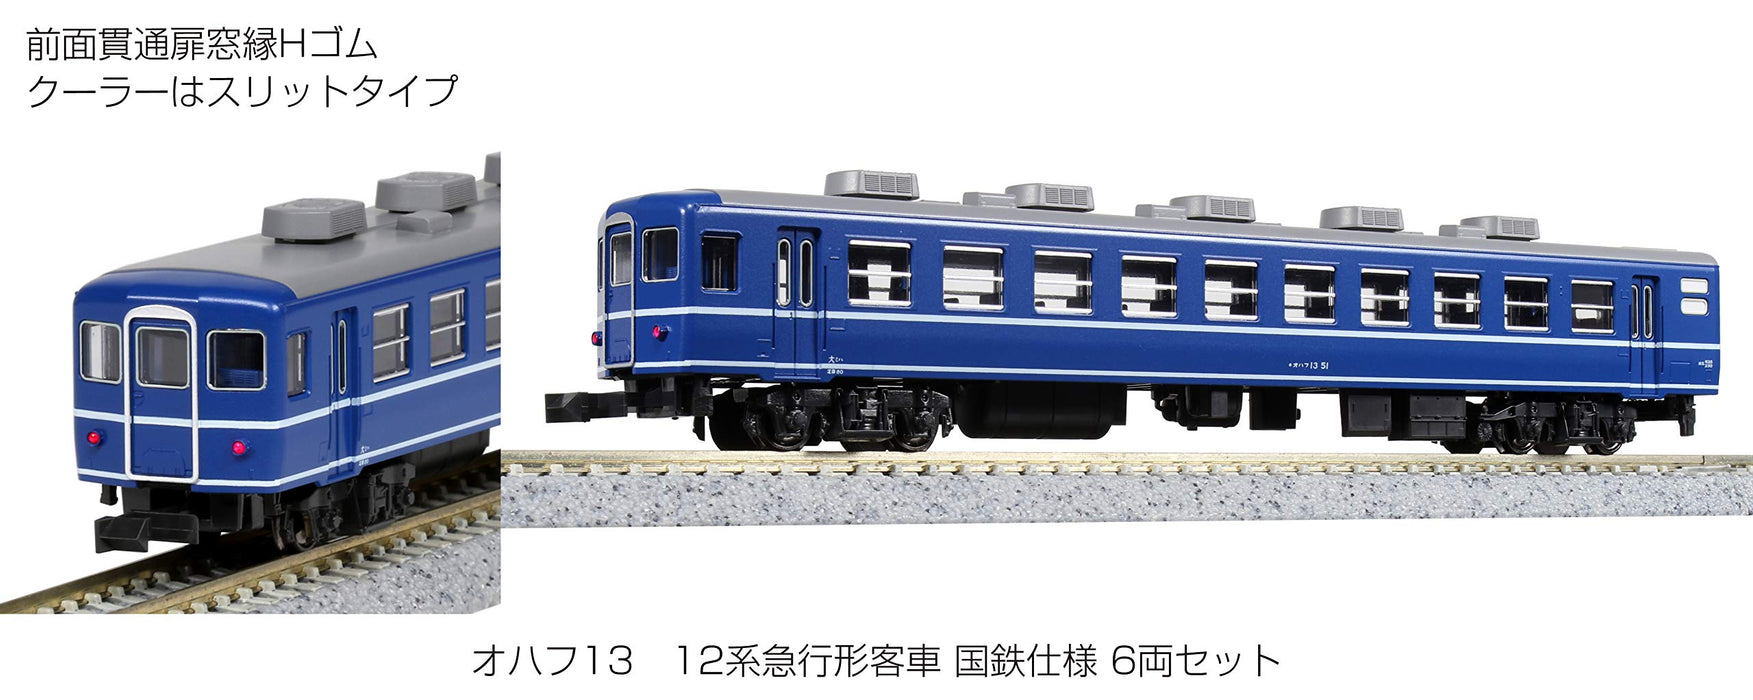 Kato N Gauge 12 Series 6-Car Express Passenger Train Set JNR Specification Railway Model 10-1550